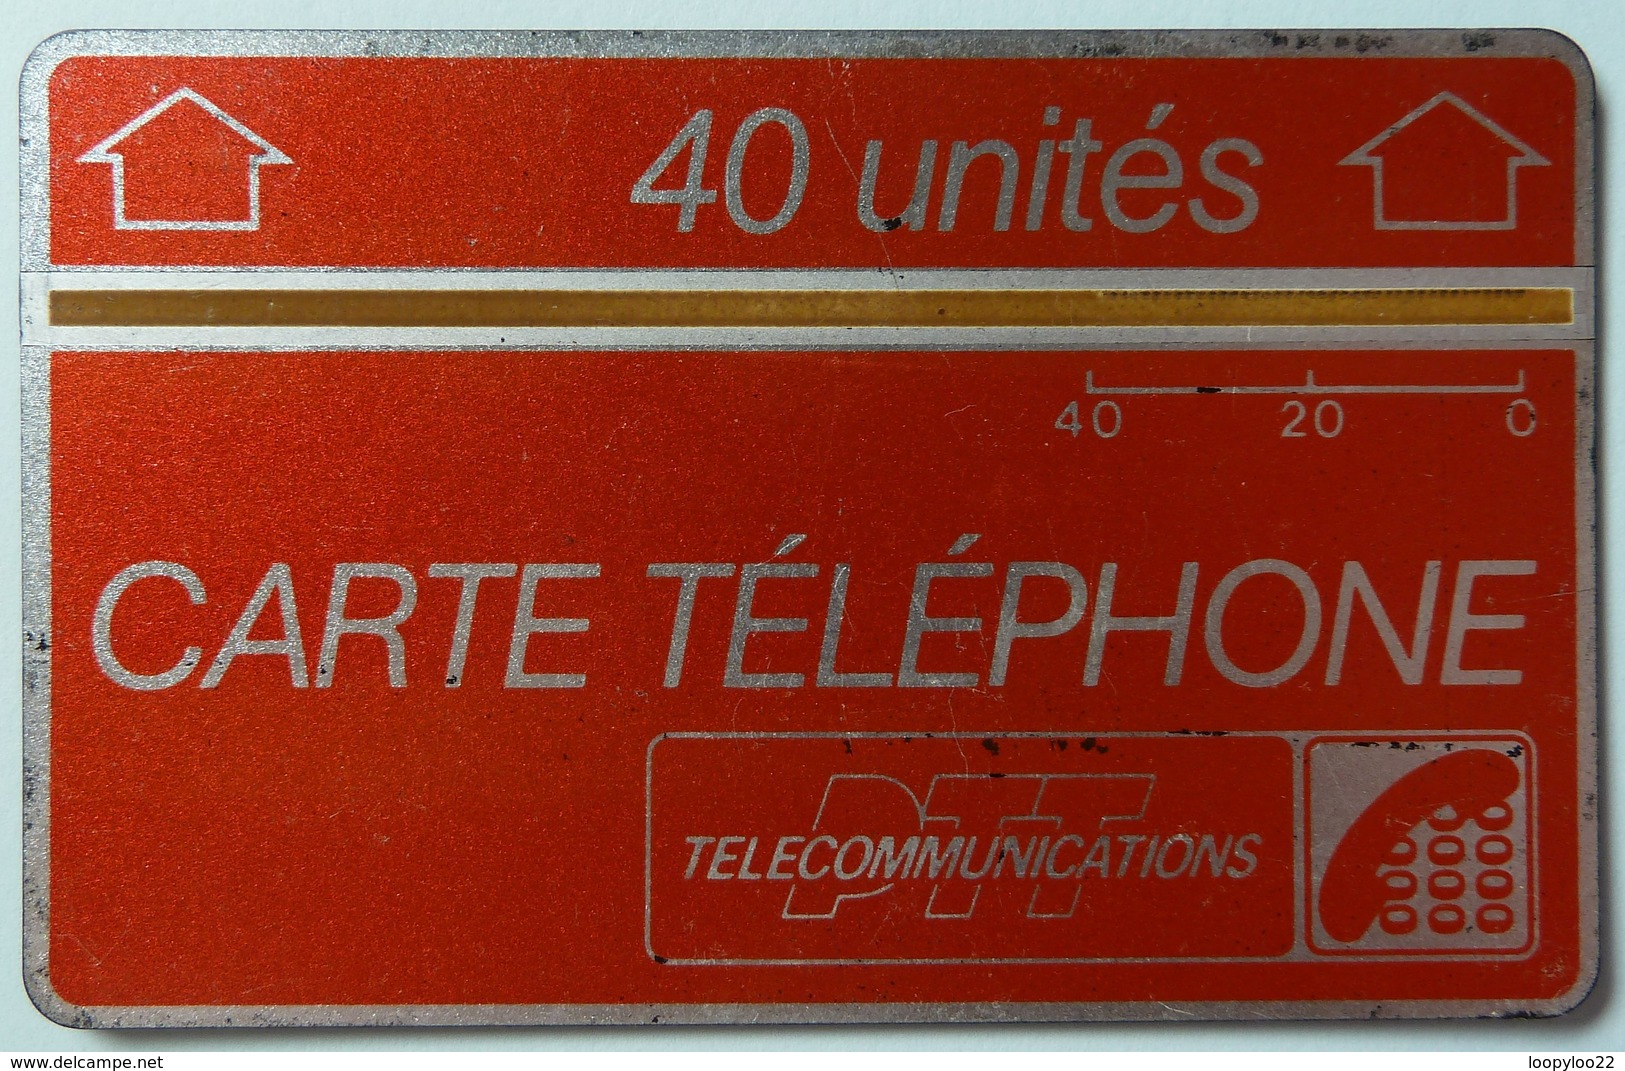 FRANCE - L&G - Landis & Gyr - 40 Units - Carte Telephone PTT - 607F - Used - RRR - Interne Telefoonkaarten